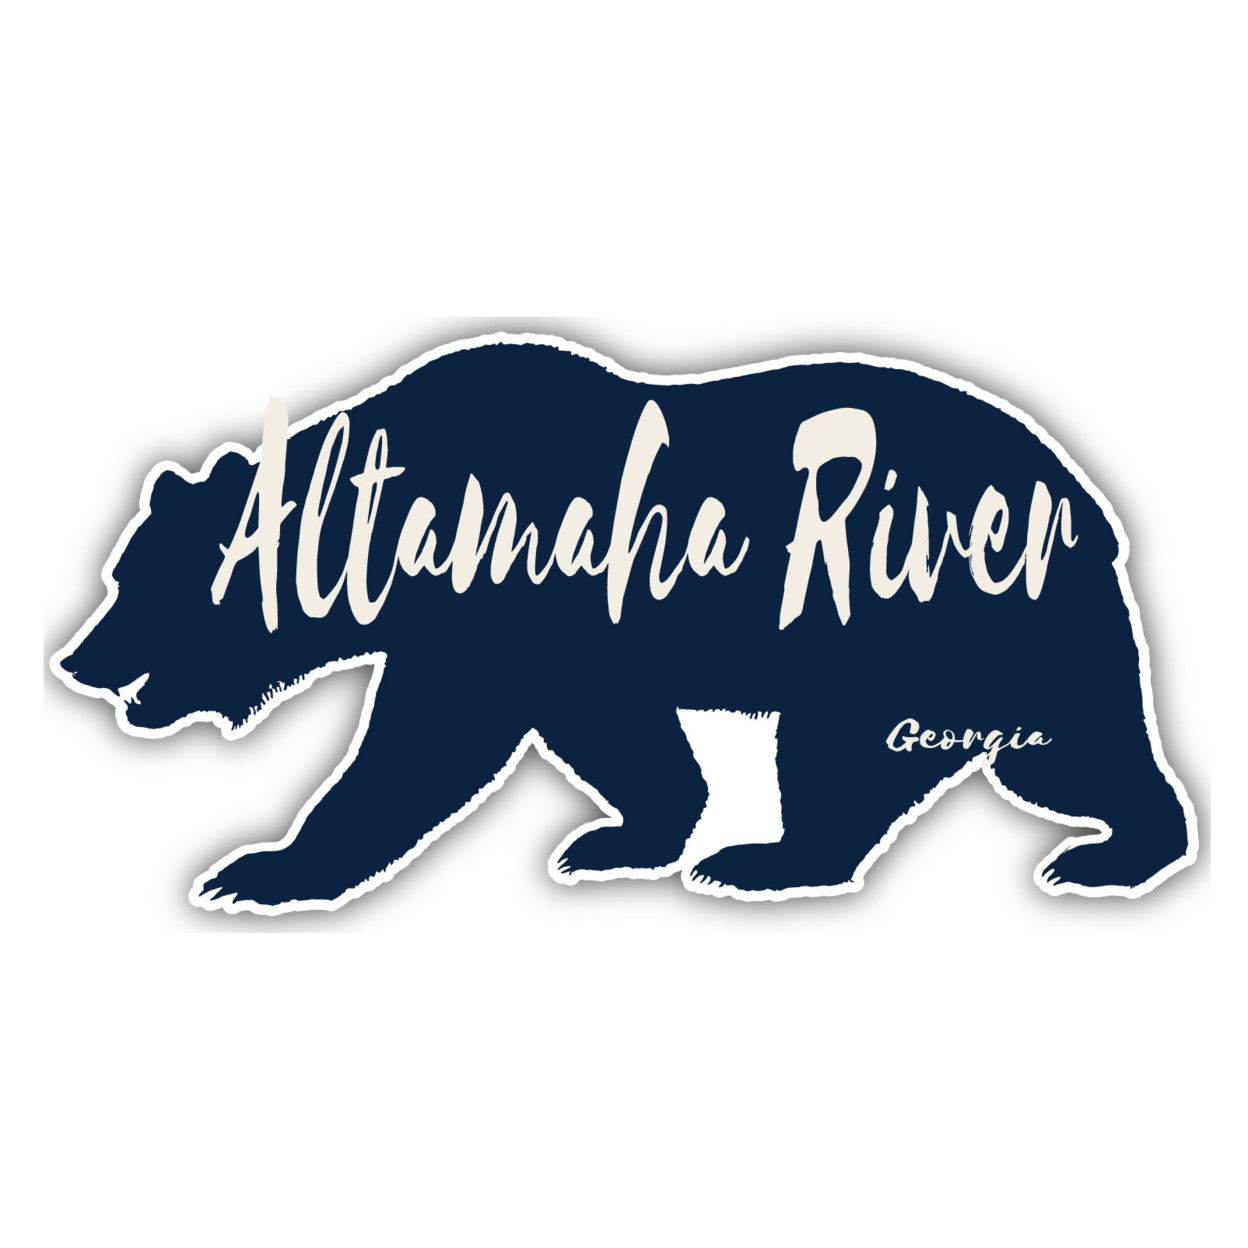 Altamaha River Georgia Souvenir Decorative Stickers (Choose Theme And Size) - 4-Pack, 2-Inch, Bear